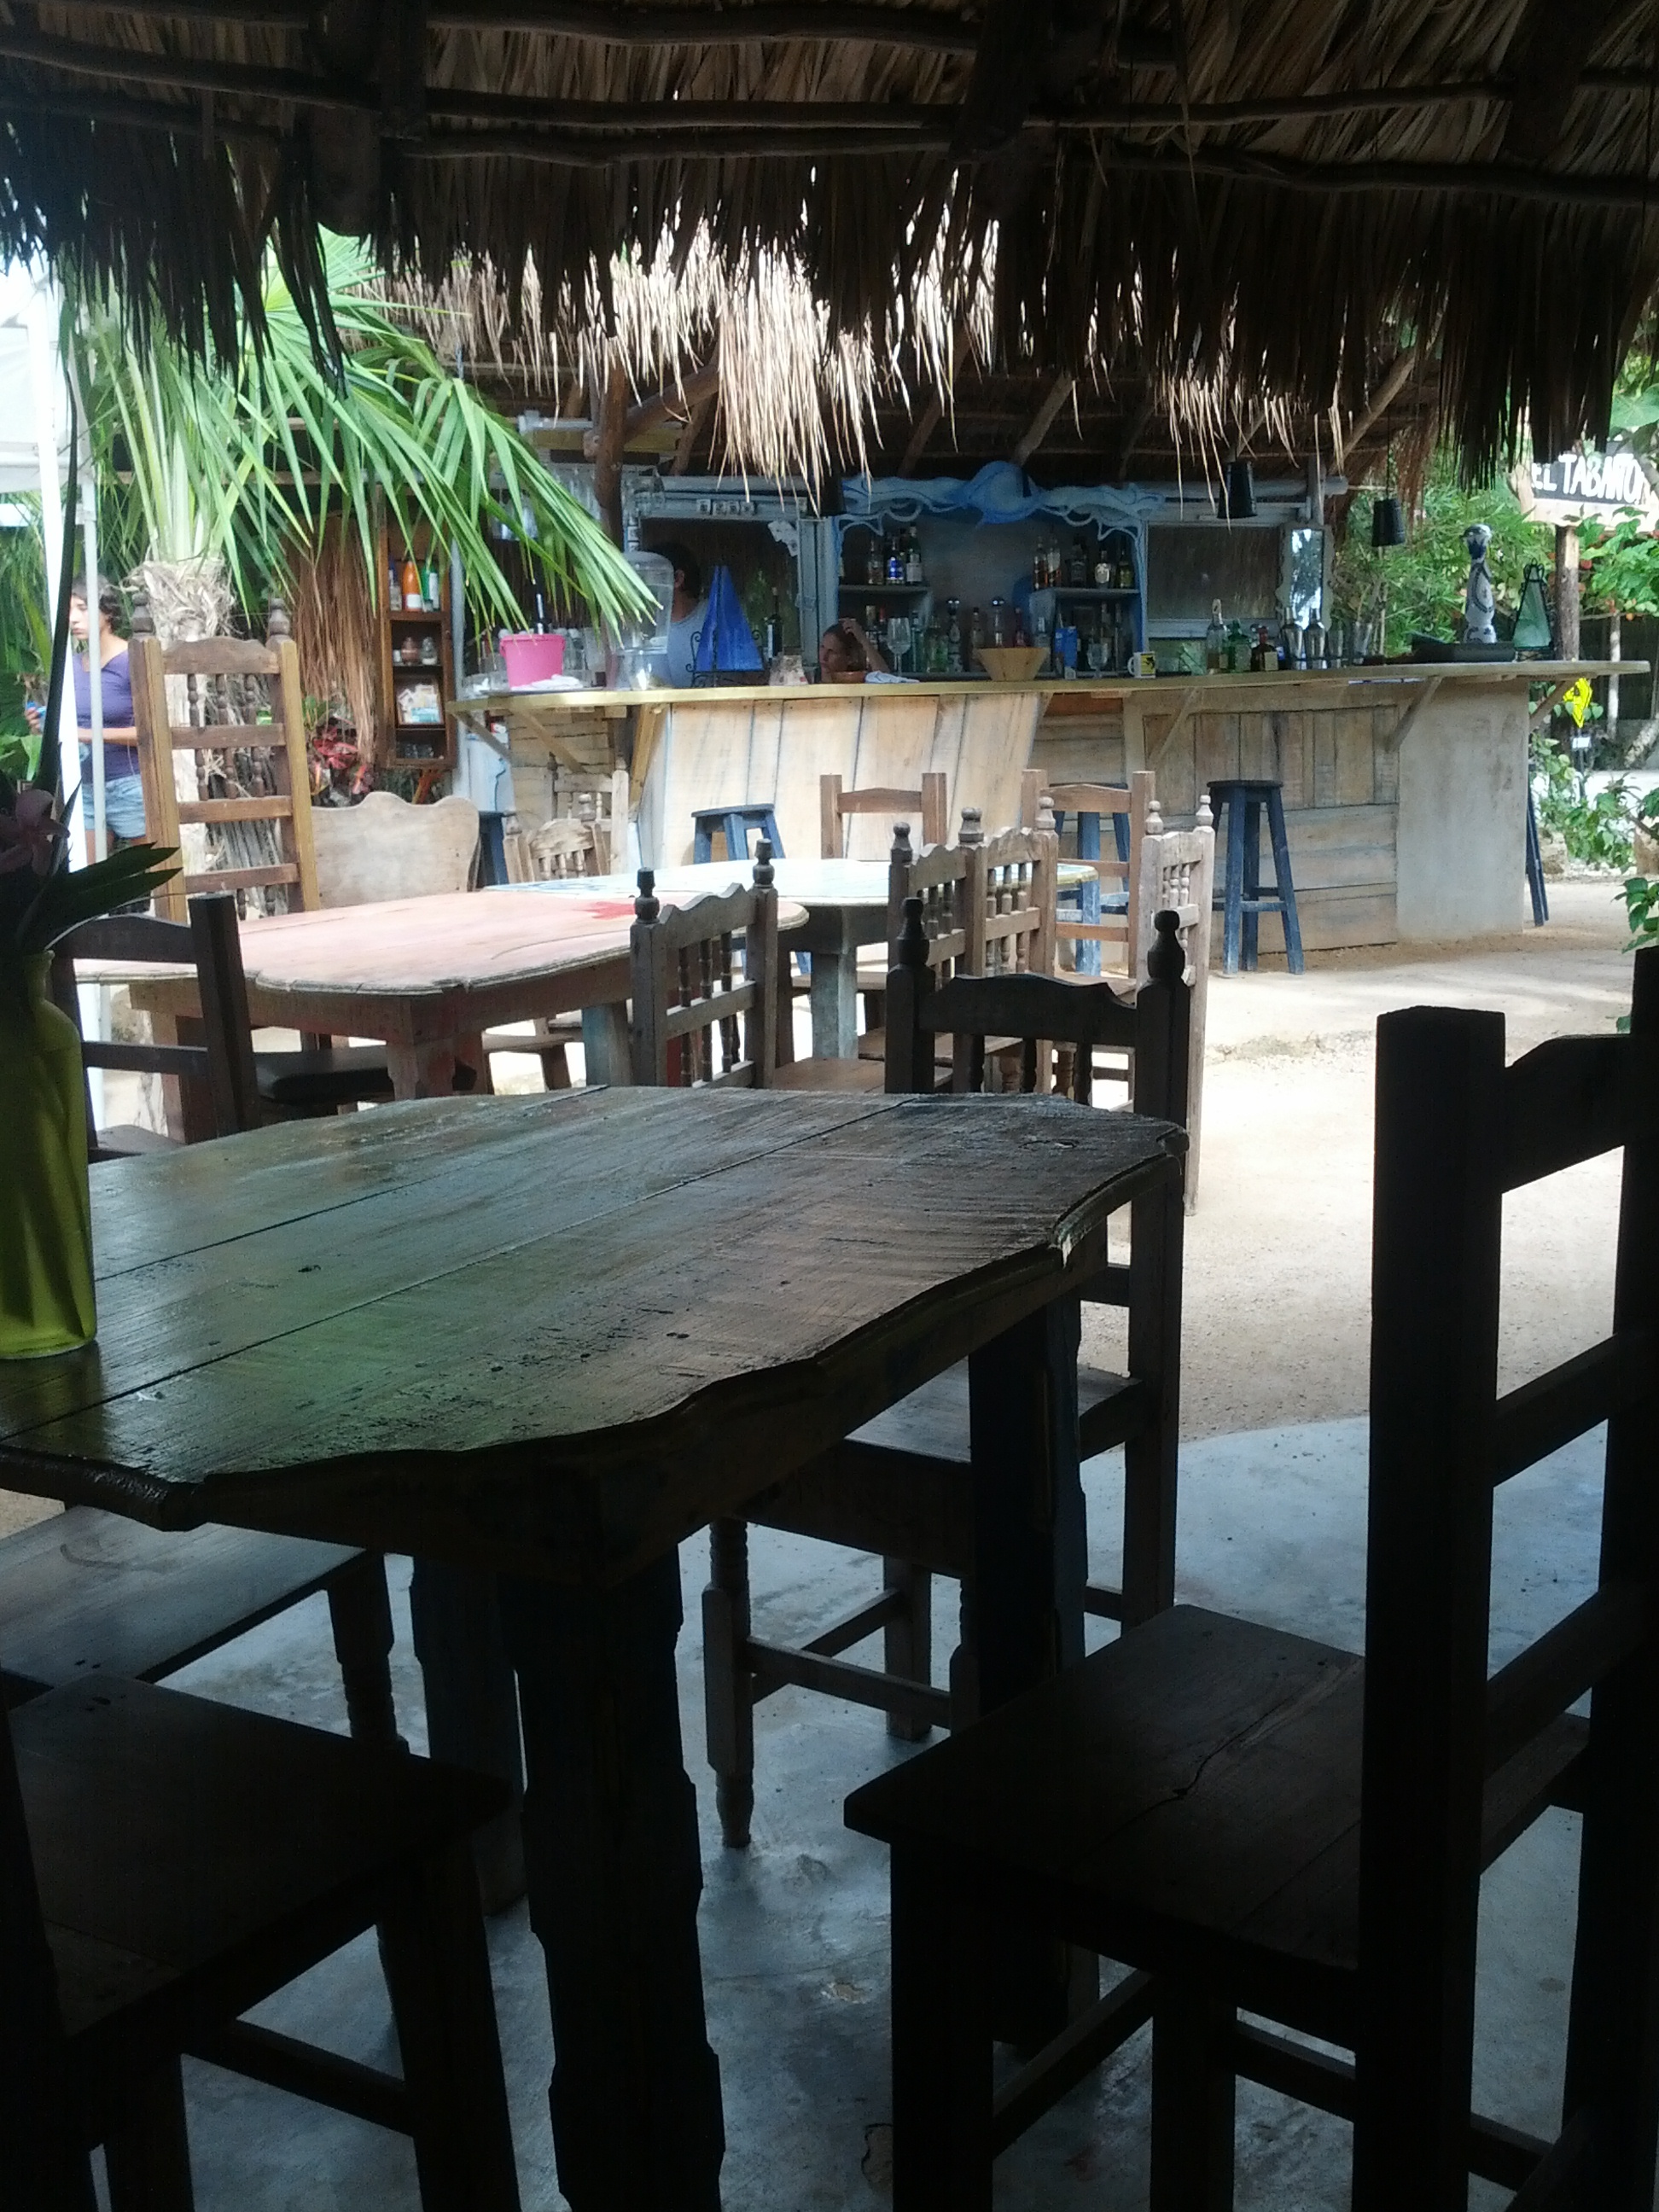 Laid back El Tábano restaurante at the Tulum beach strip